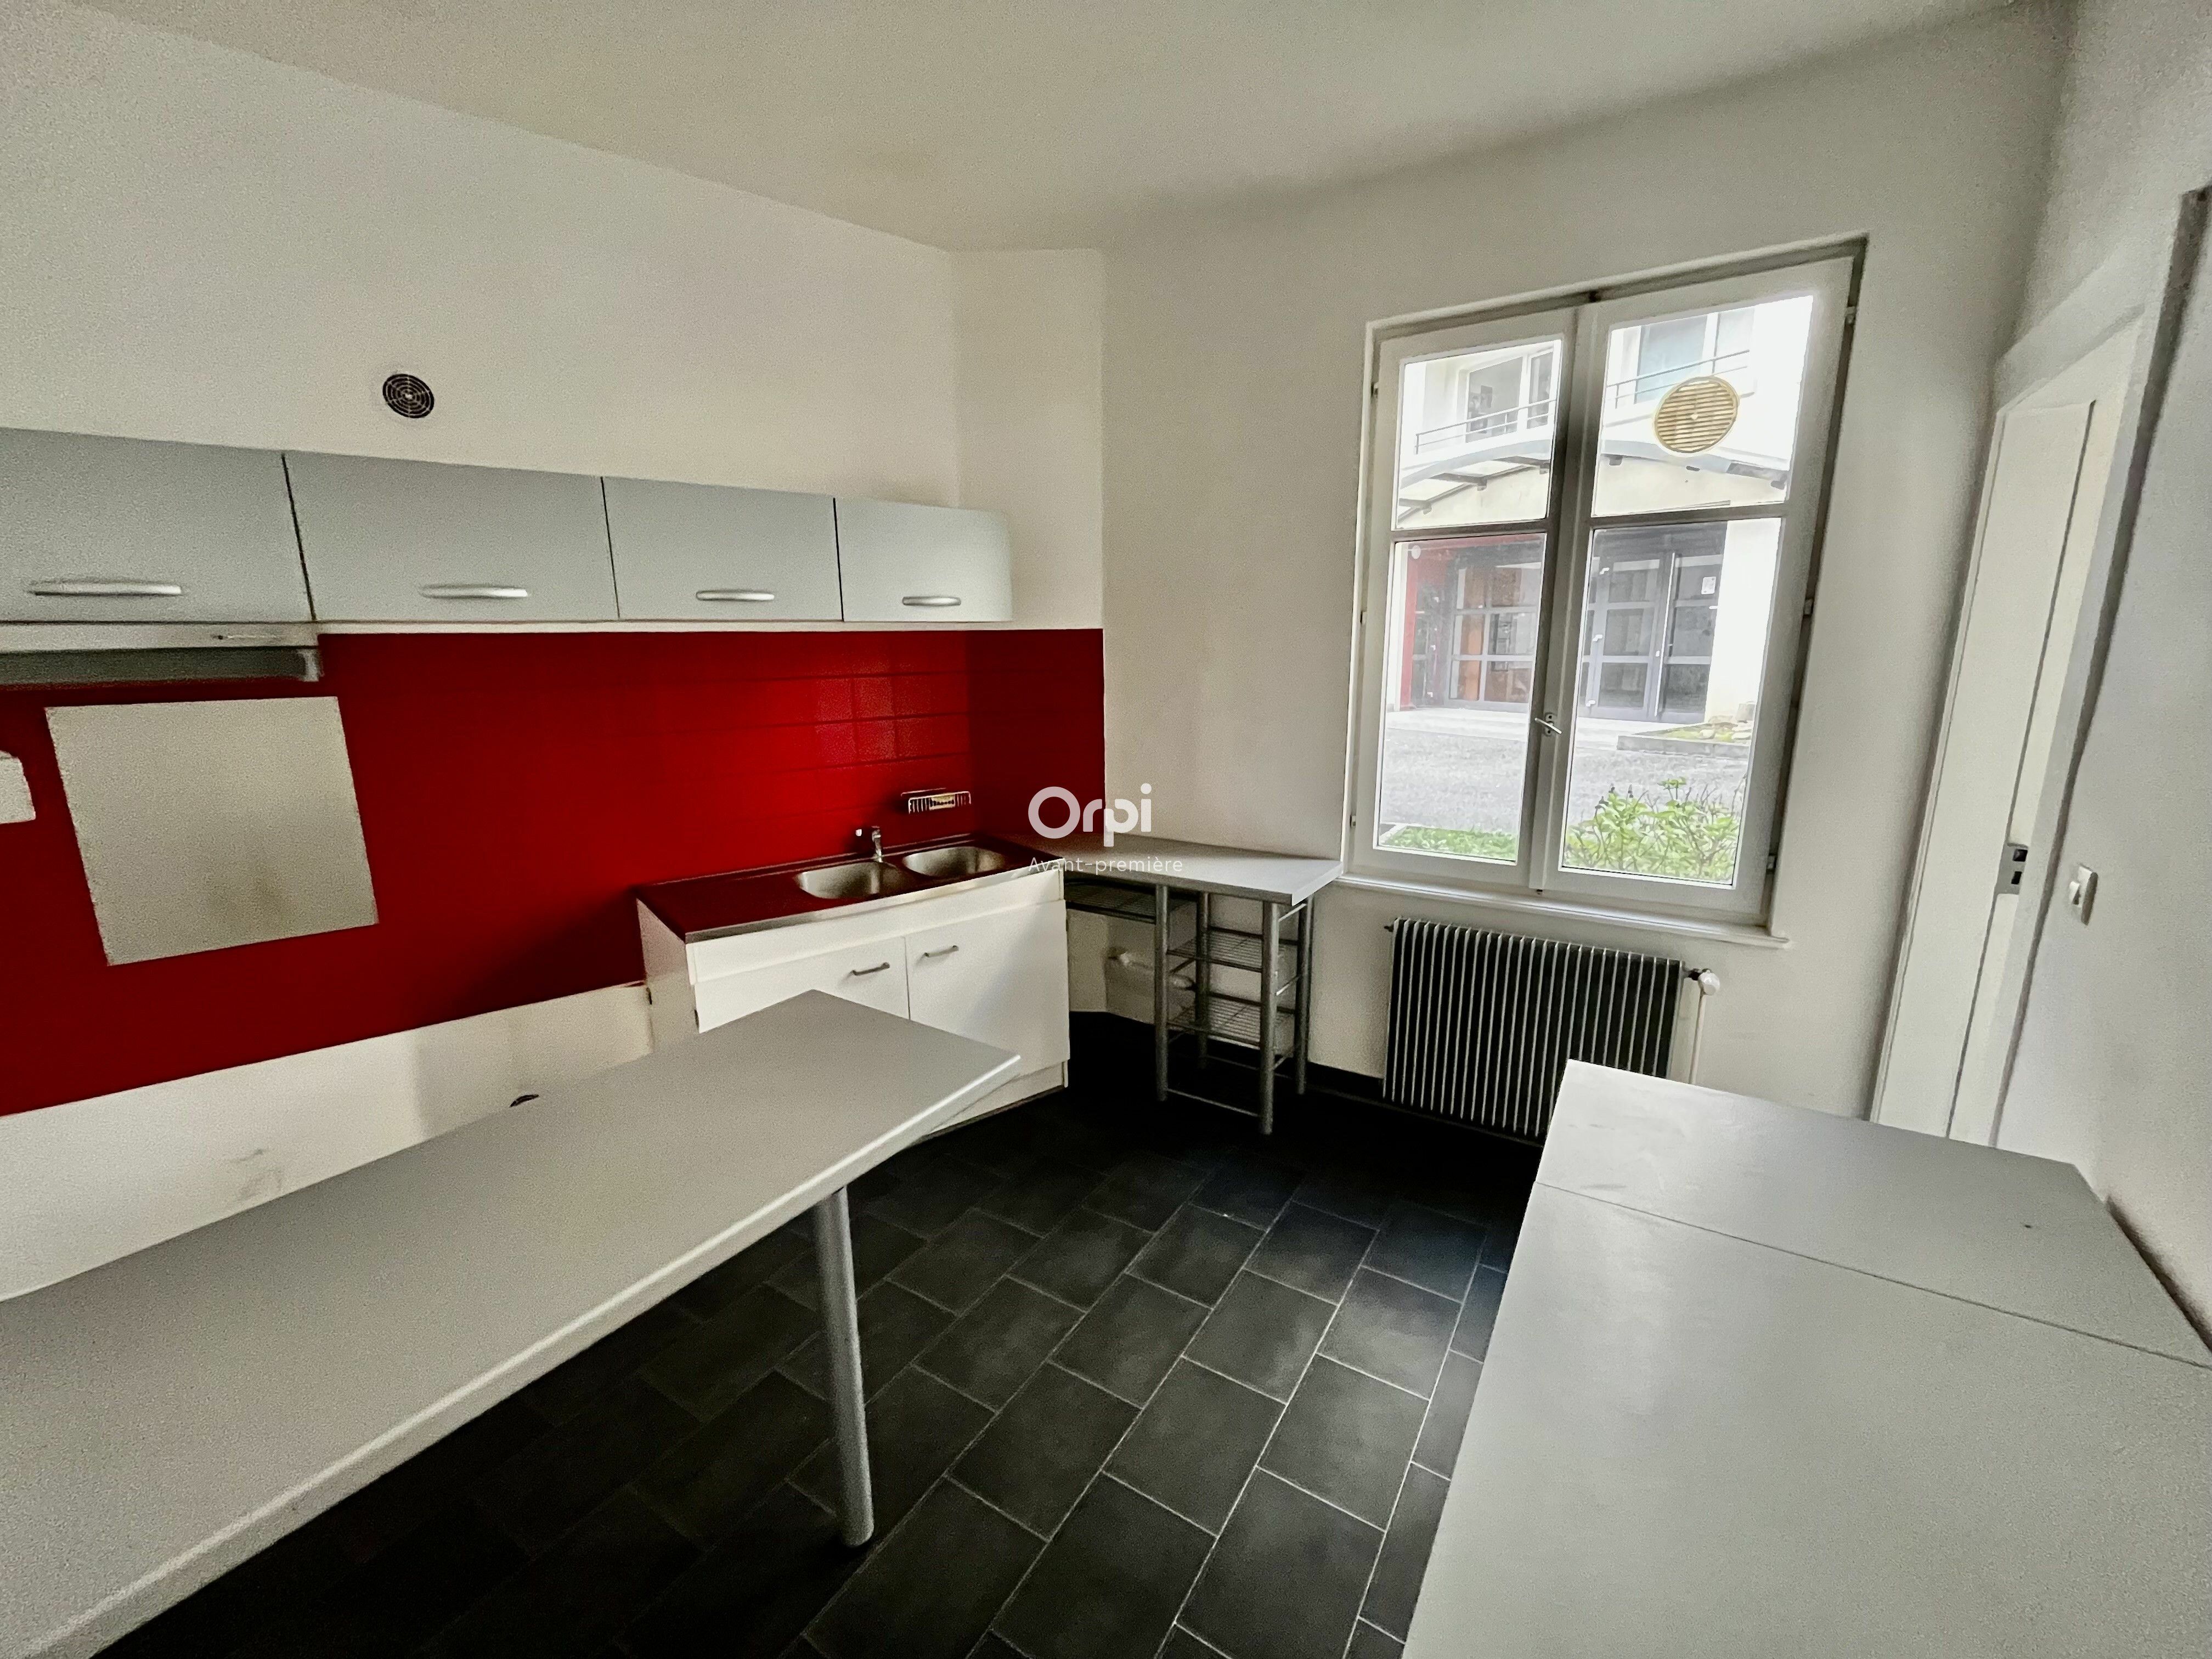 Appartement à vendre 2 67m2 à Strasbourg vignette-3